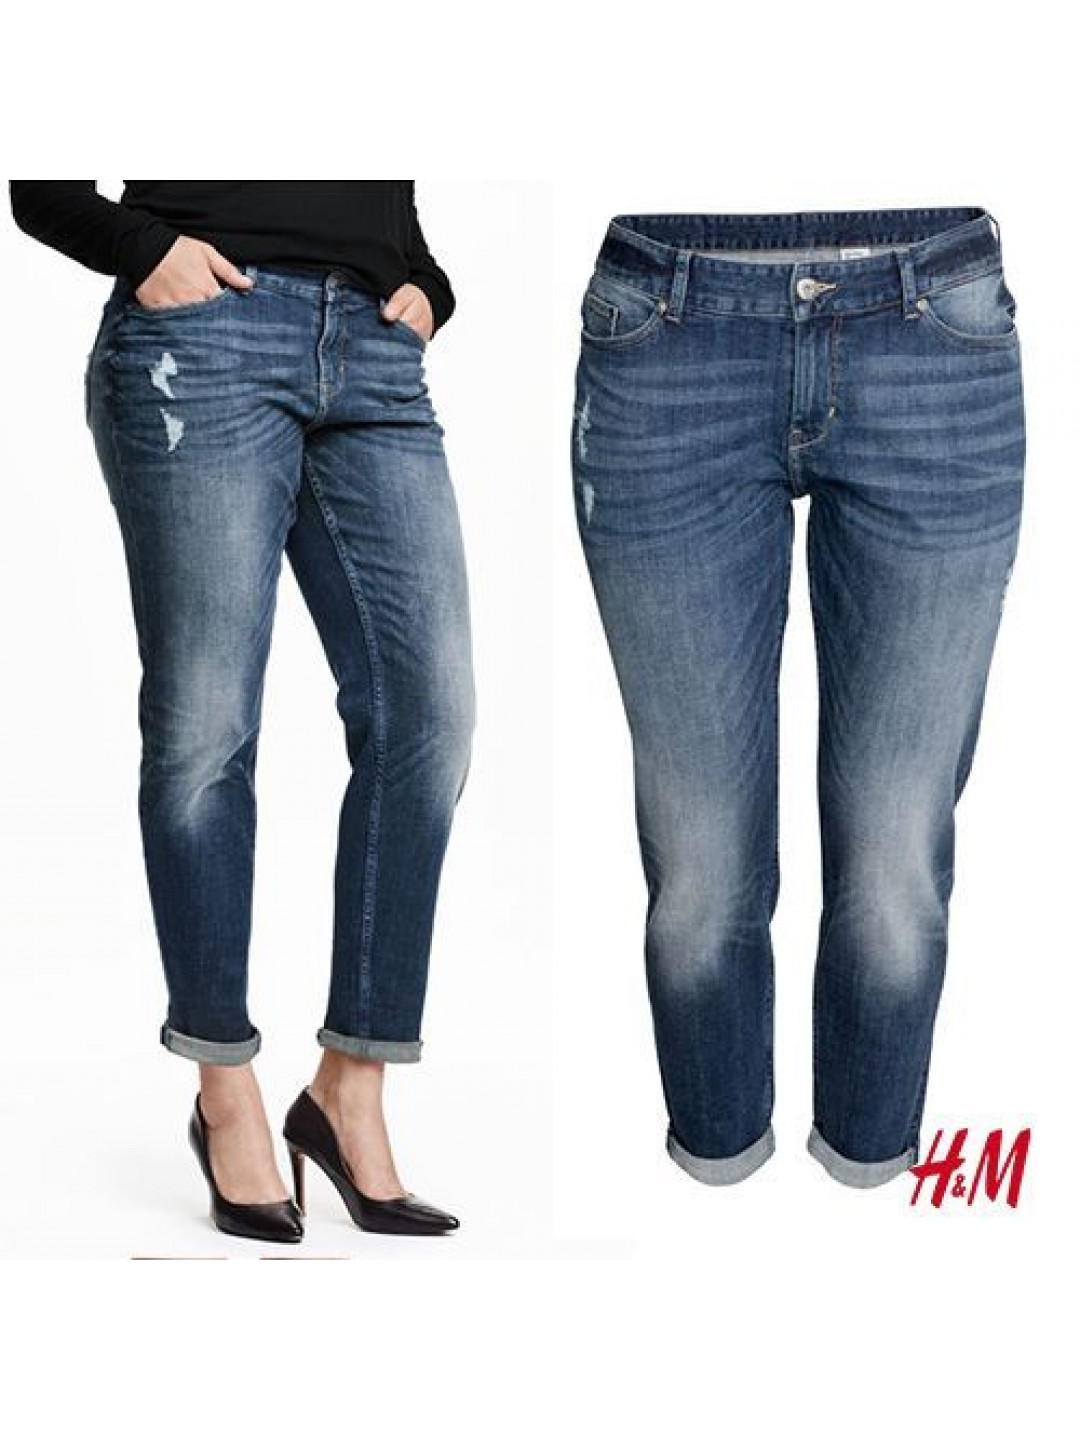 h&m boyfriend low jeans